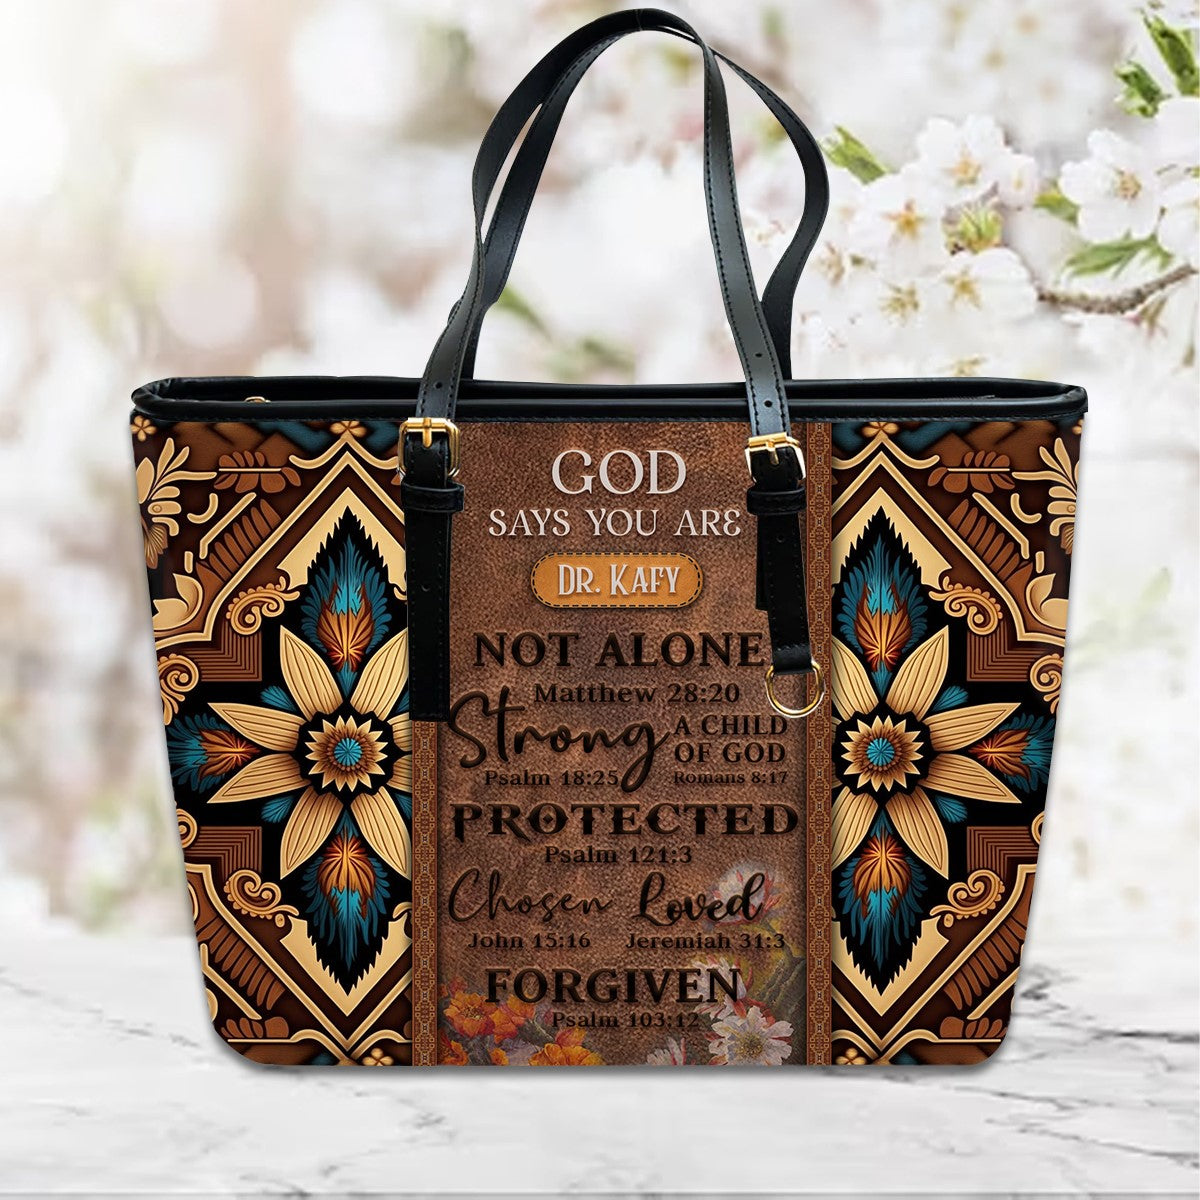 Christianartbag Handbags, GOD Says You Are Leather Handbag, Southwest Native American embroidery Handbag, Gifts for Women, CABLTB02101023. - Christian Art Bag